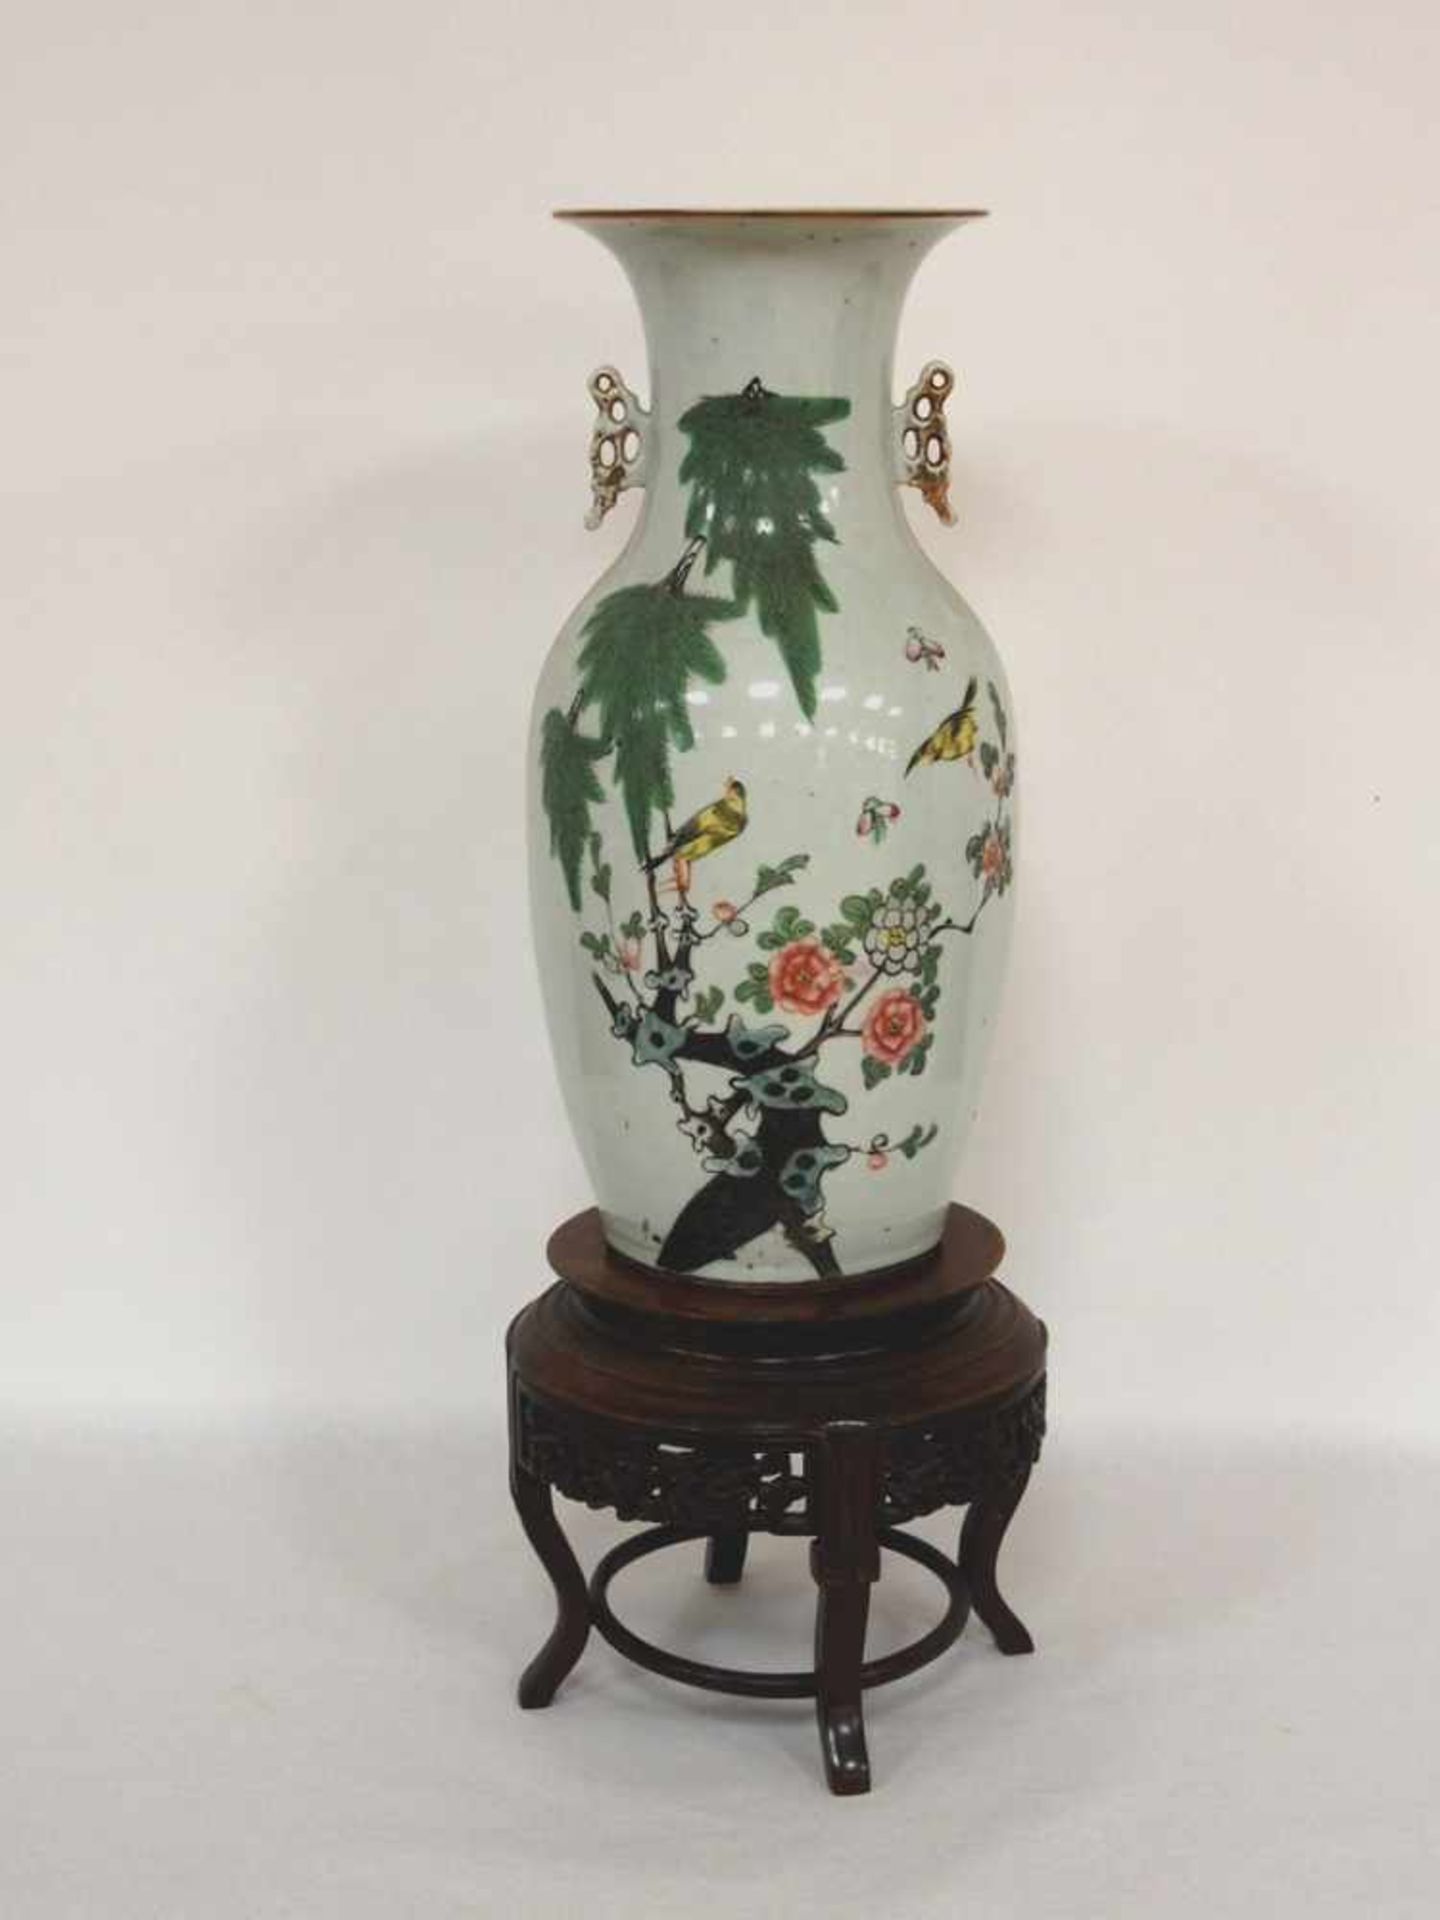 VasePorzellan, China, um 1920, Höhe 43 cm- - -25.00 % buyer's premium on the hammer price, VAT